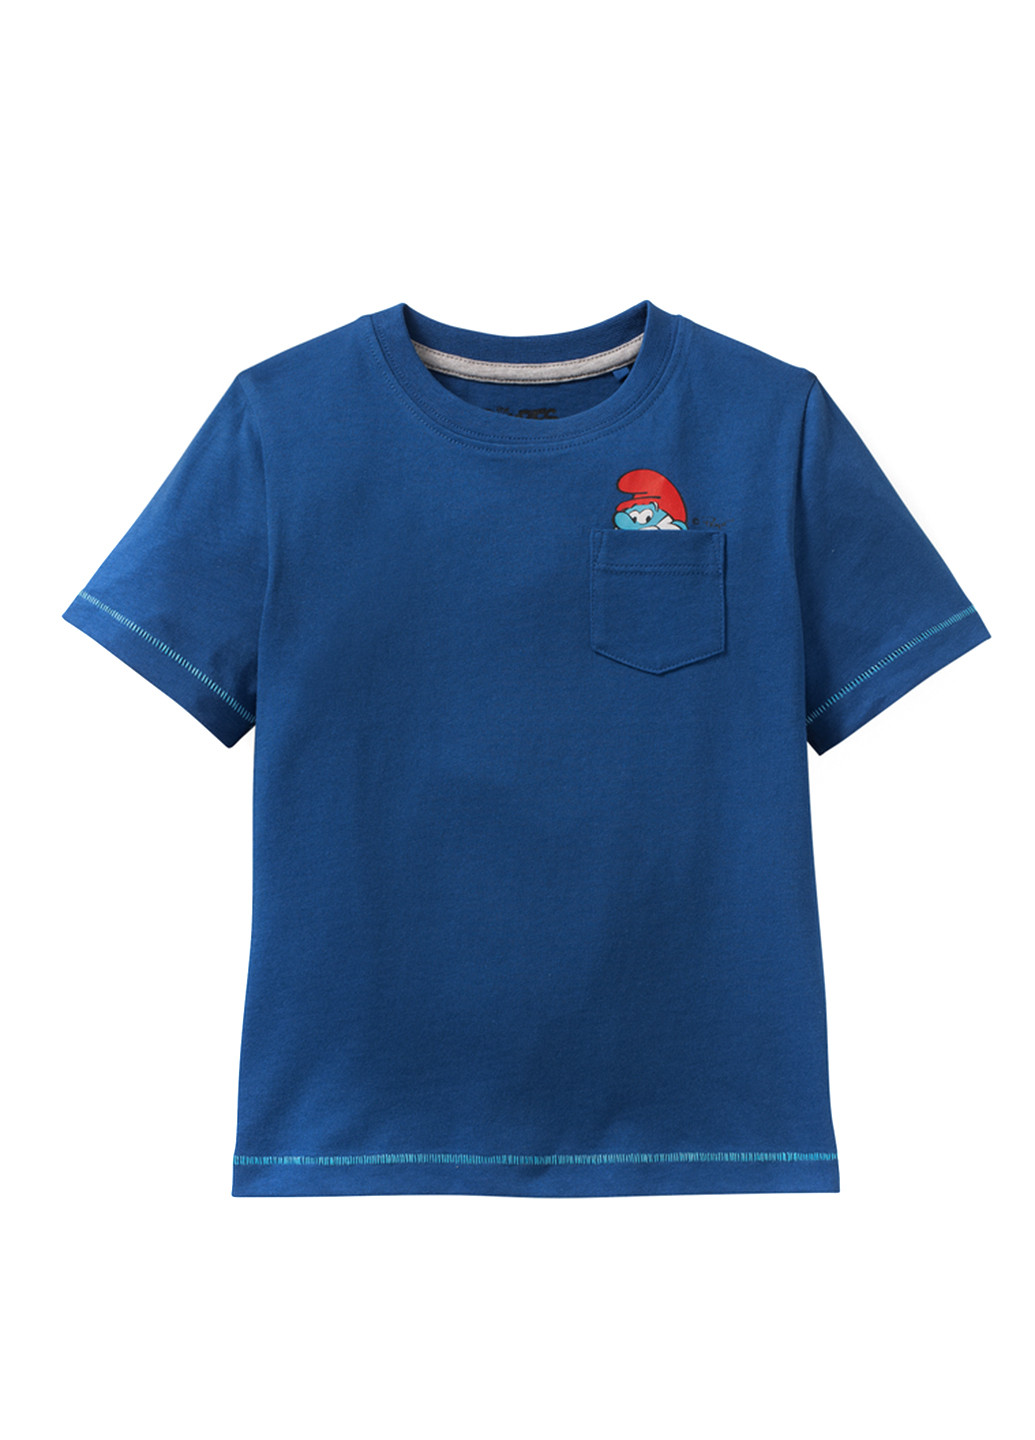 Темно-синяя летняя футболка The Smurfs